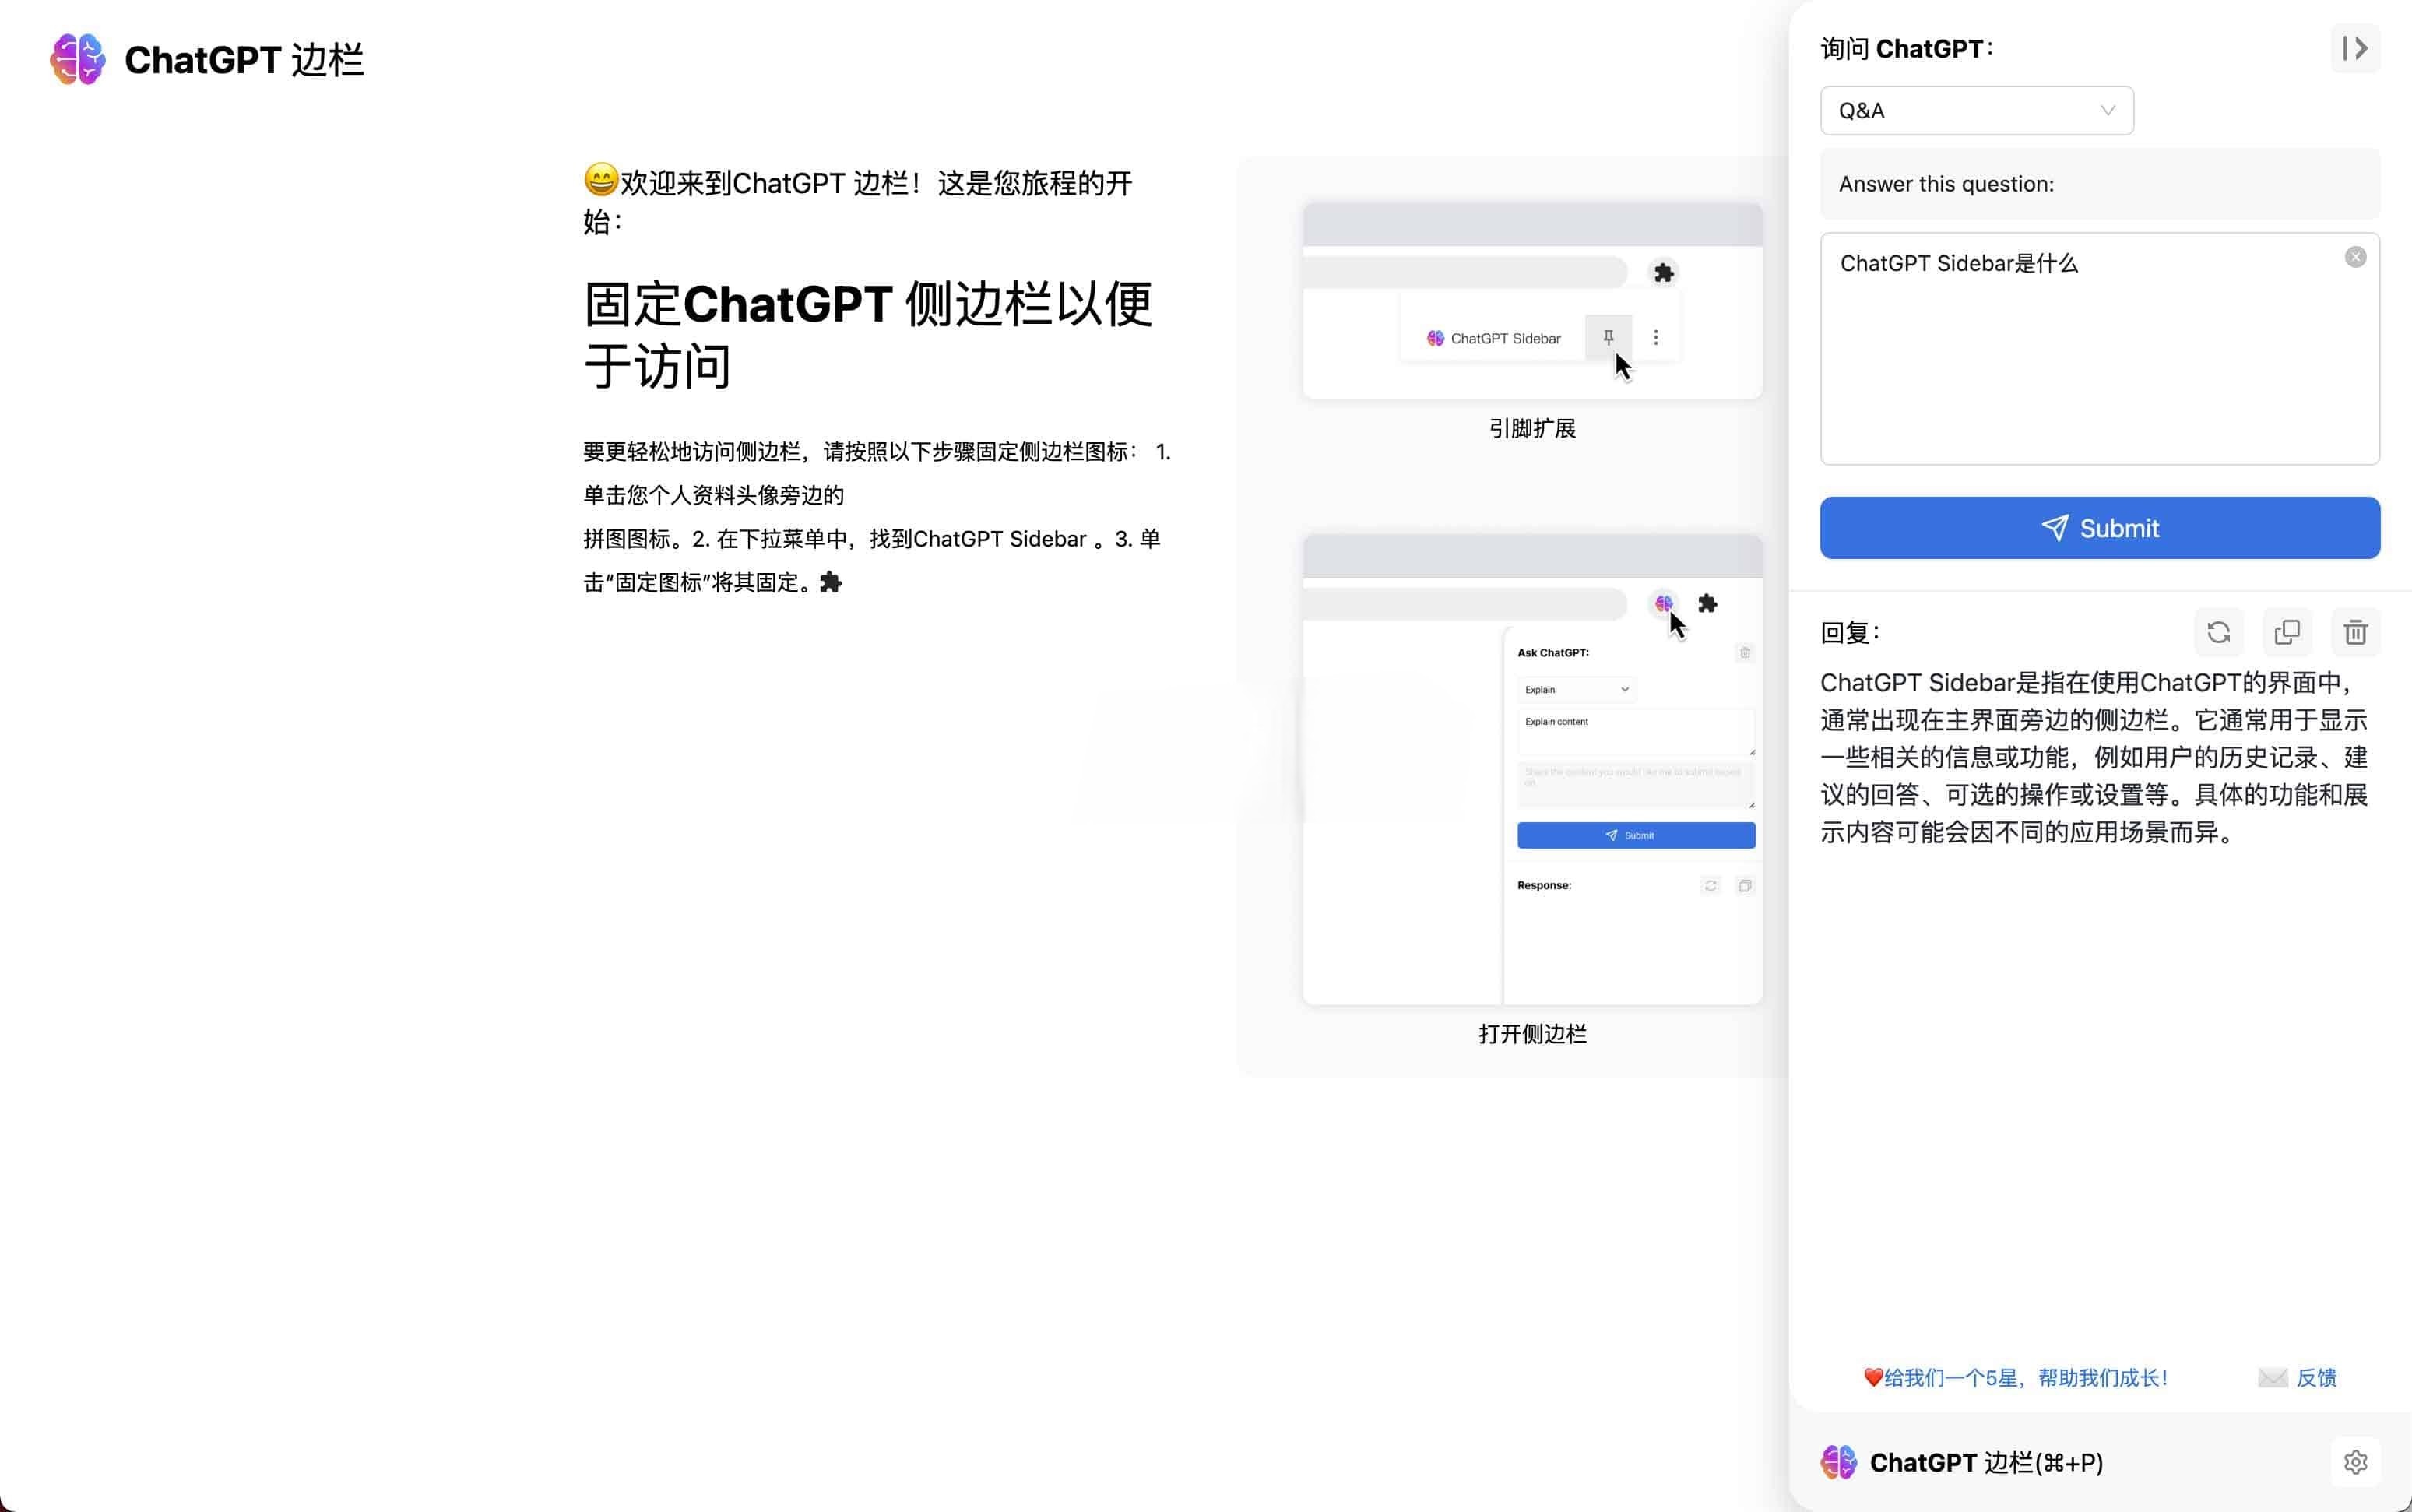 ChatGPT Sidebar-网页侧边栏AI 助手